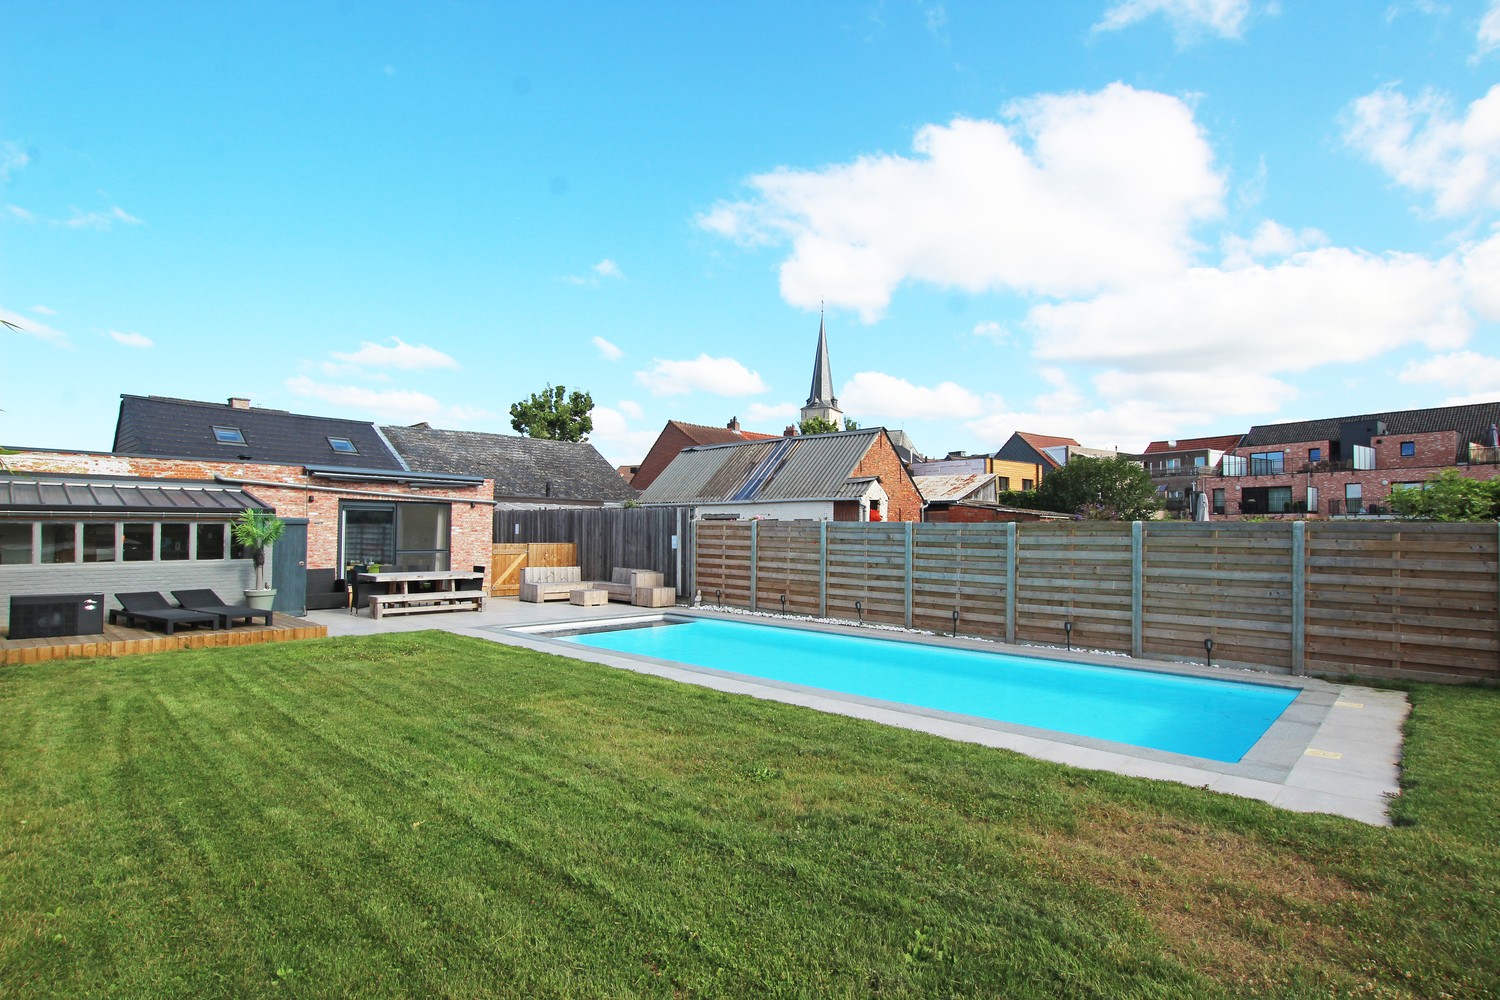 Verrassend ruime woning met riante tuin (774m²) en verwarmd zwembad in hartje Broechem! afbeelding 24